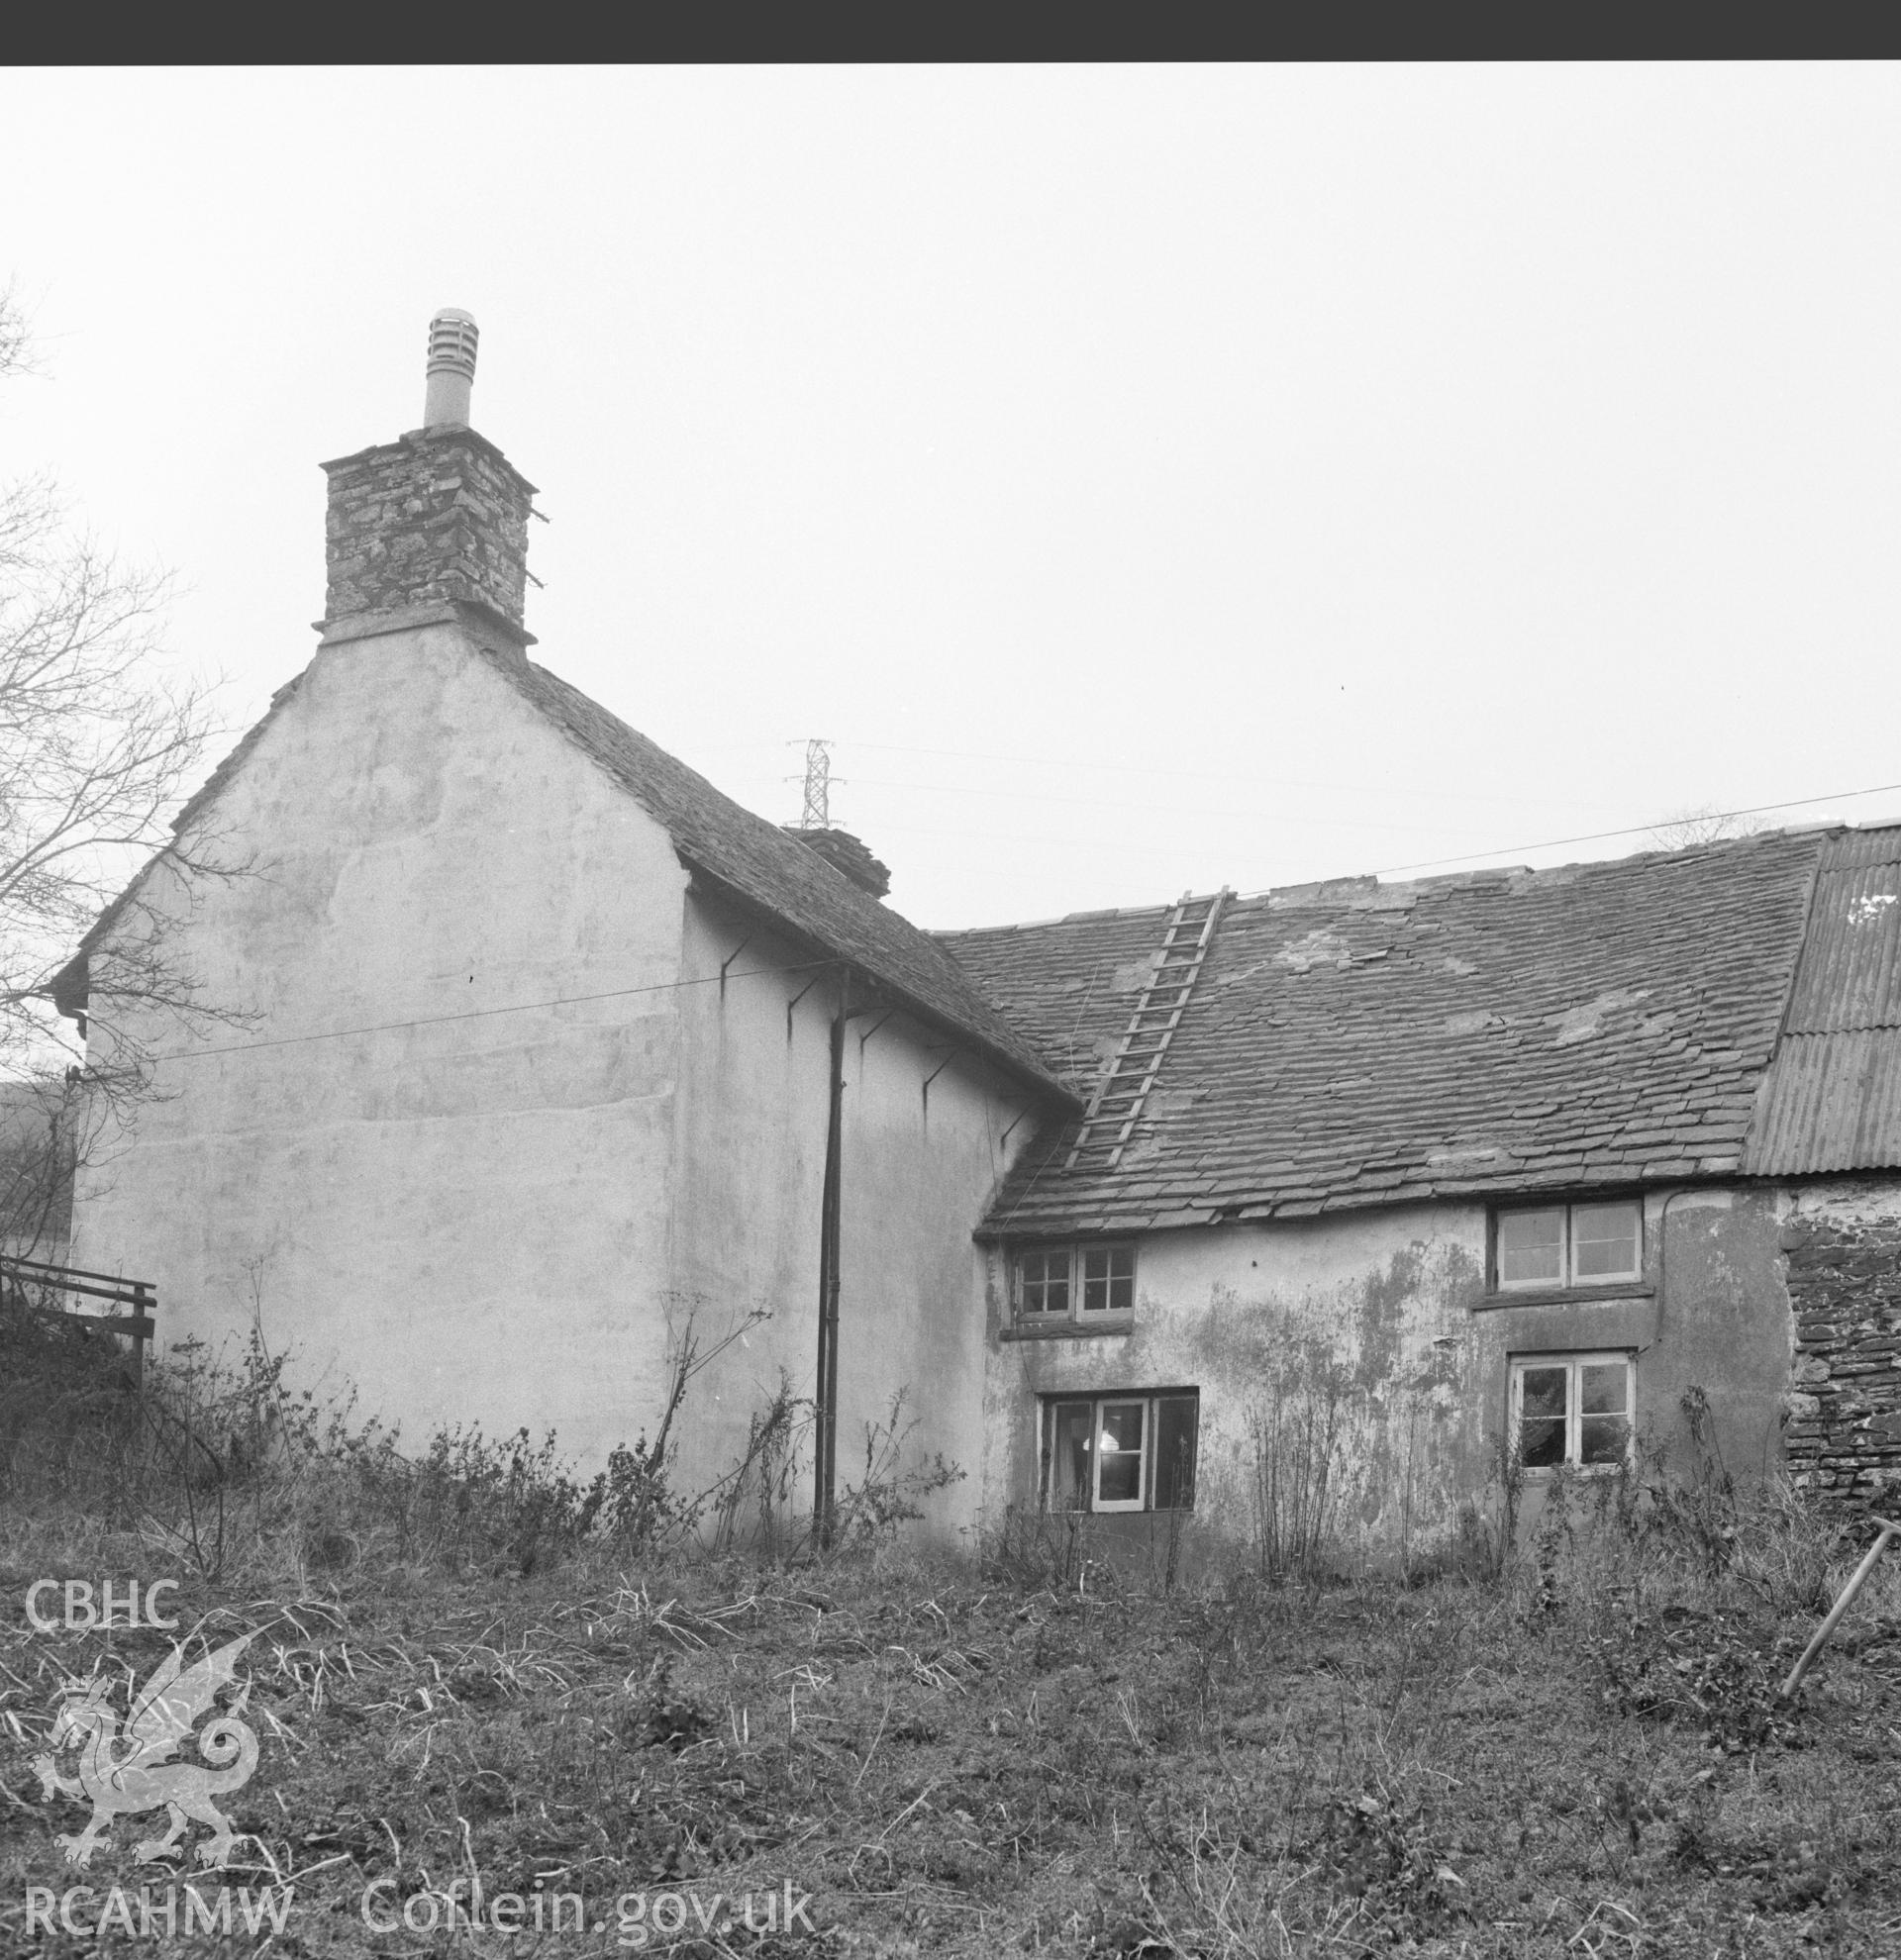 Digital copy of a black and white negative showing Parc Mawr, Eglwysilan, taken 19th November 1965.